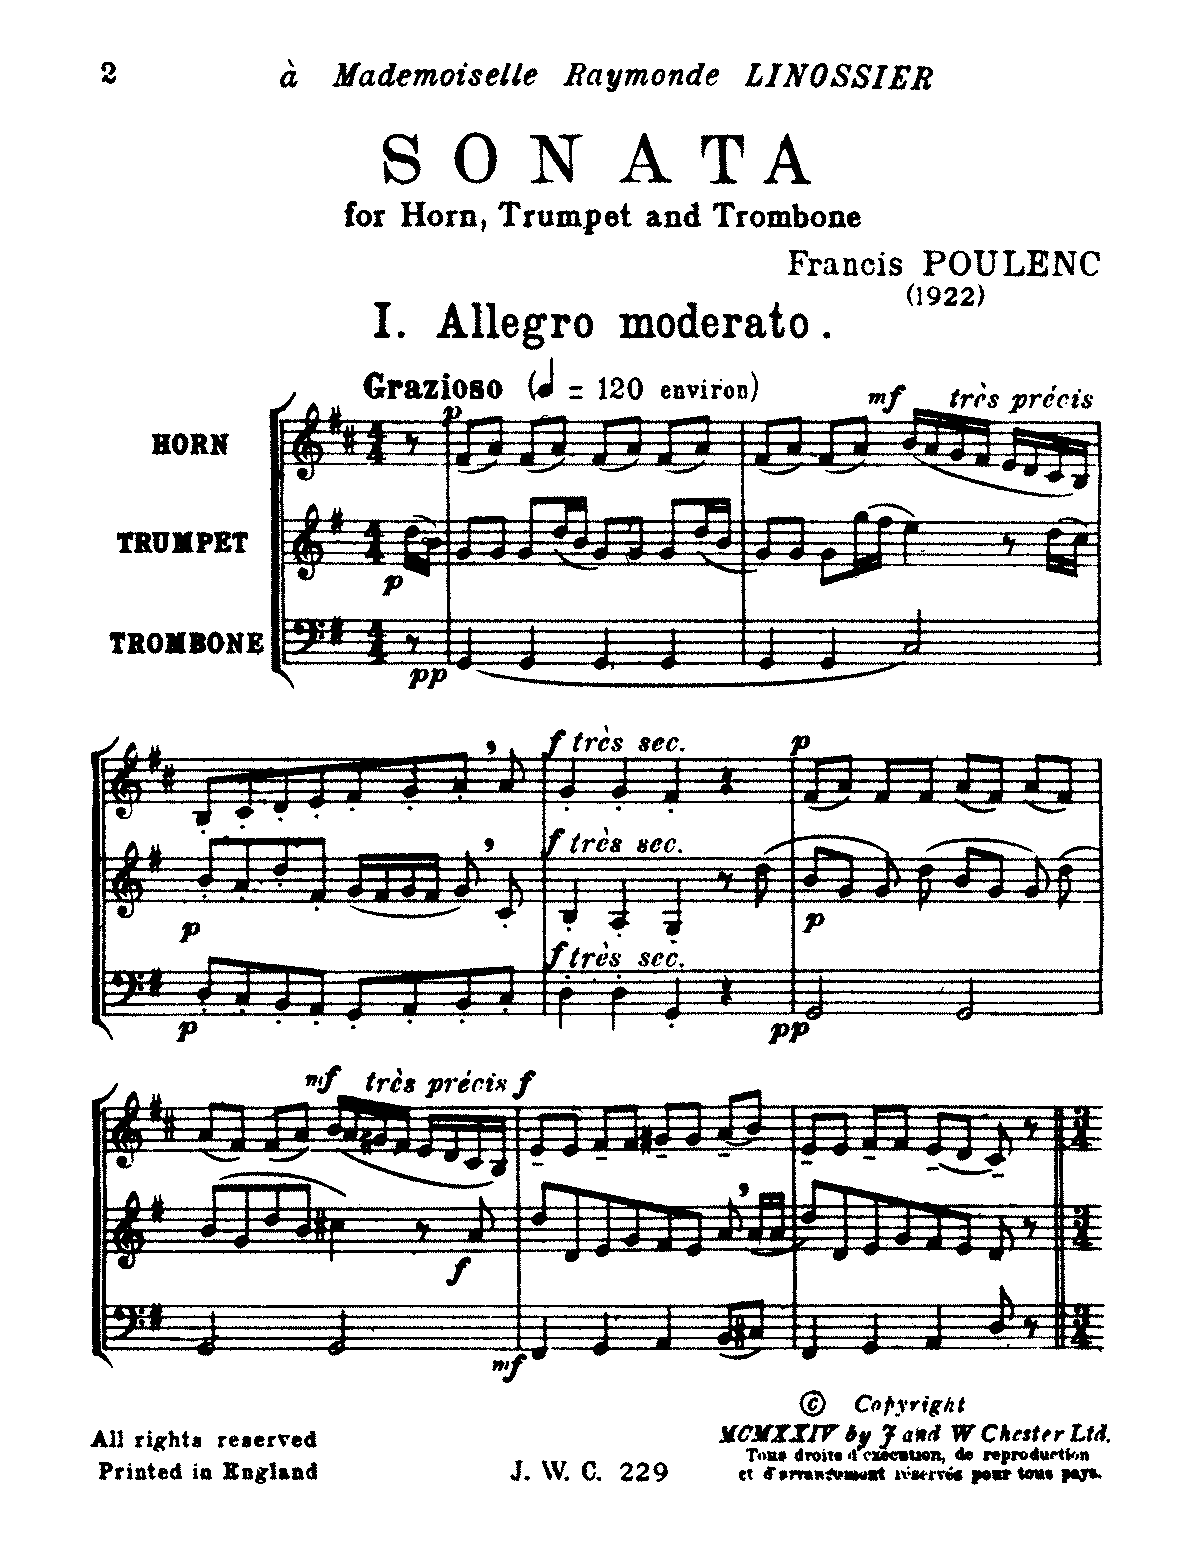 poulenc clarinet sonata program notes